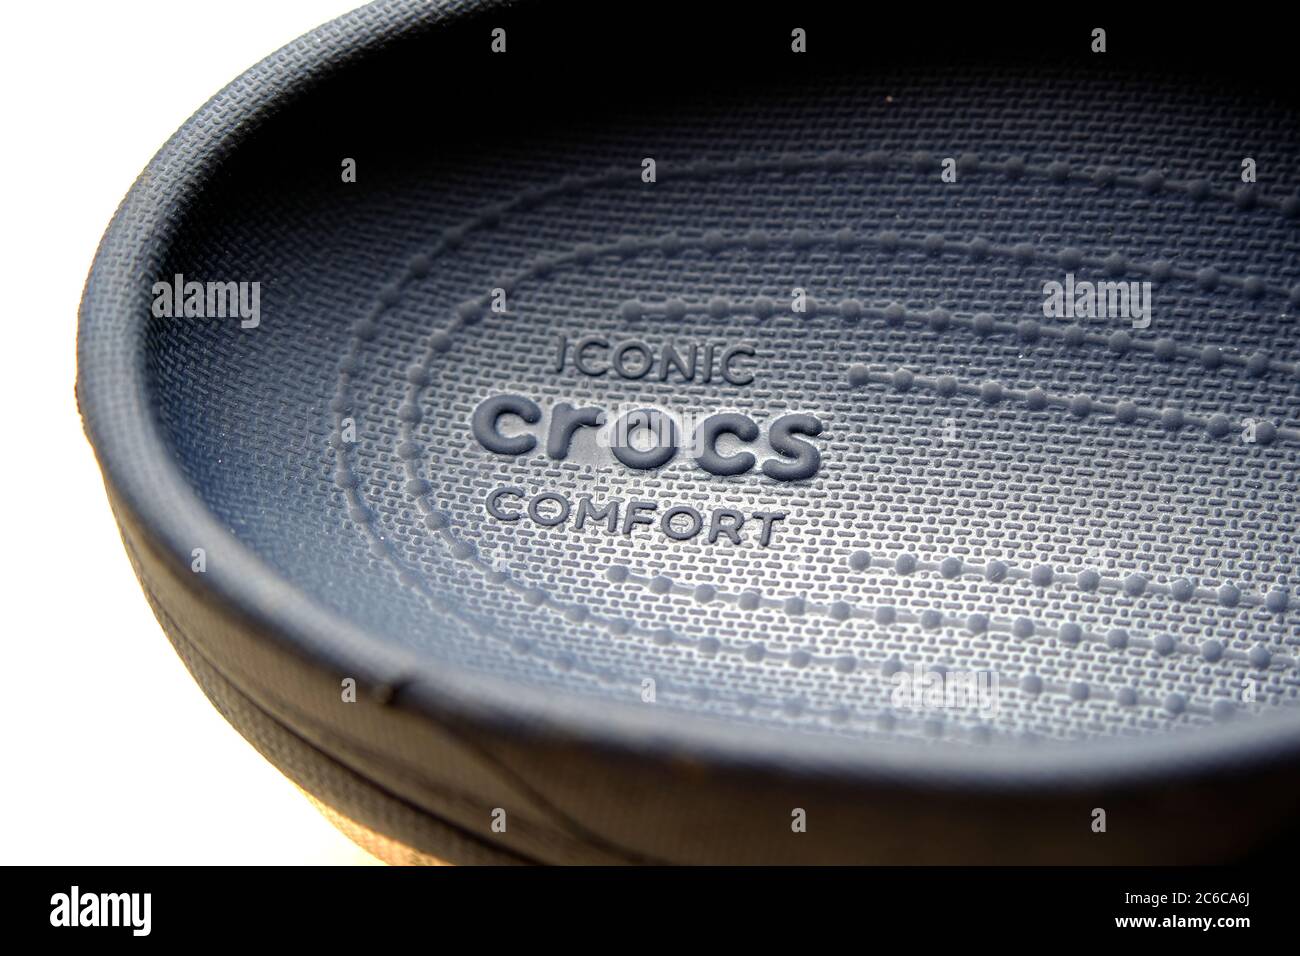 Stone / UK - 8. Juli 2020: Crocs Logo auf dem dunkelblauen Gummi Erwachsenen Pantoffel zu sehen. Kultige Crocs Komfort Clogs Nahaufnahme Foto. Stockfoto